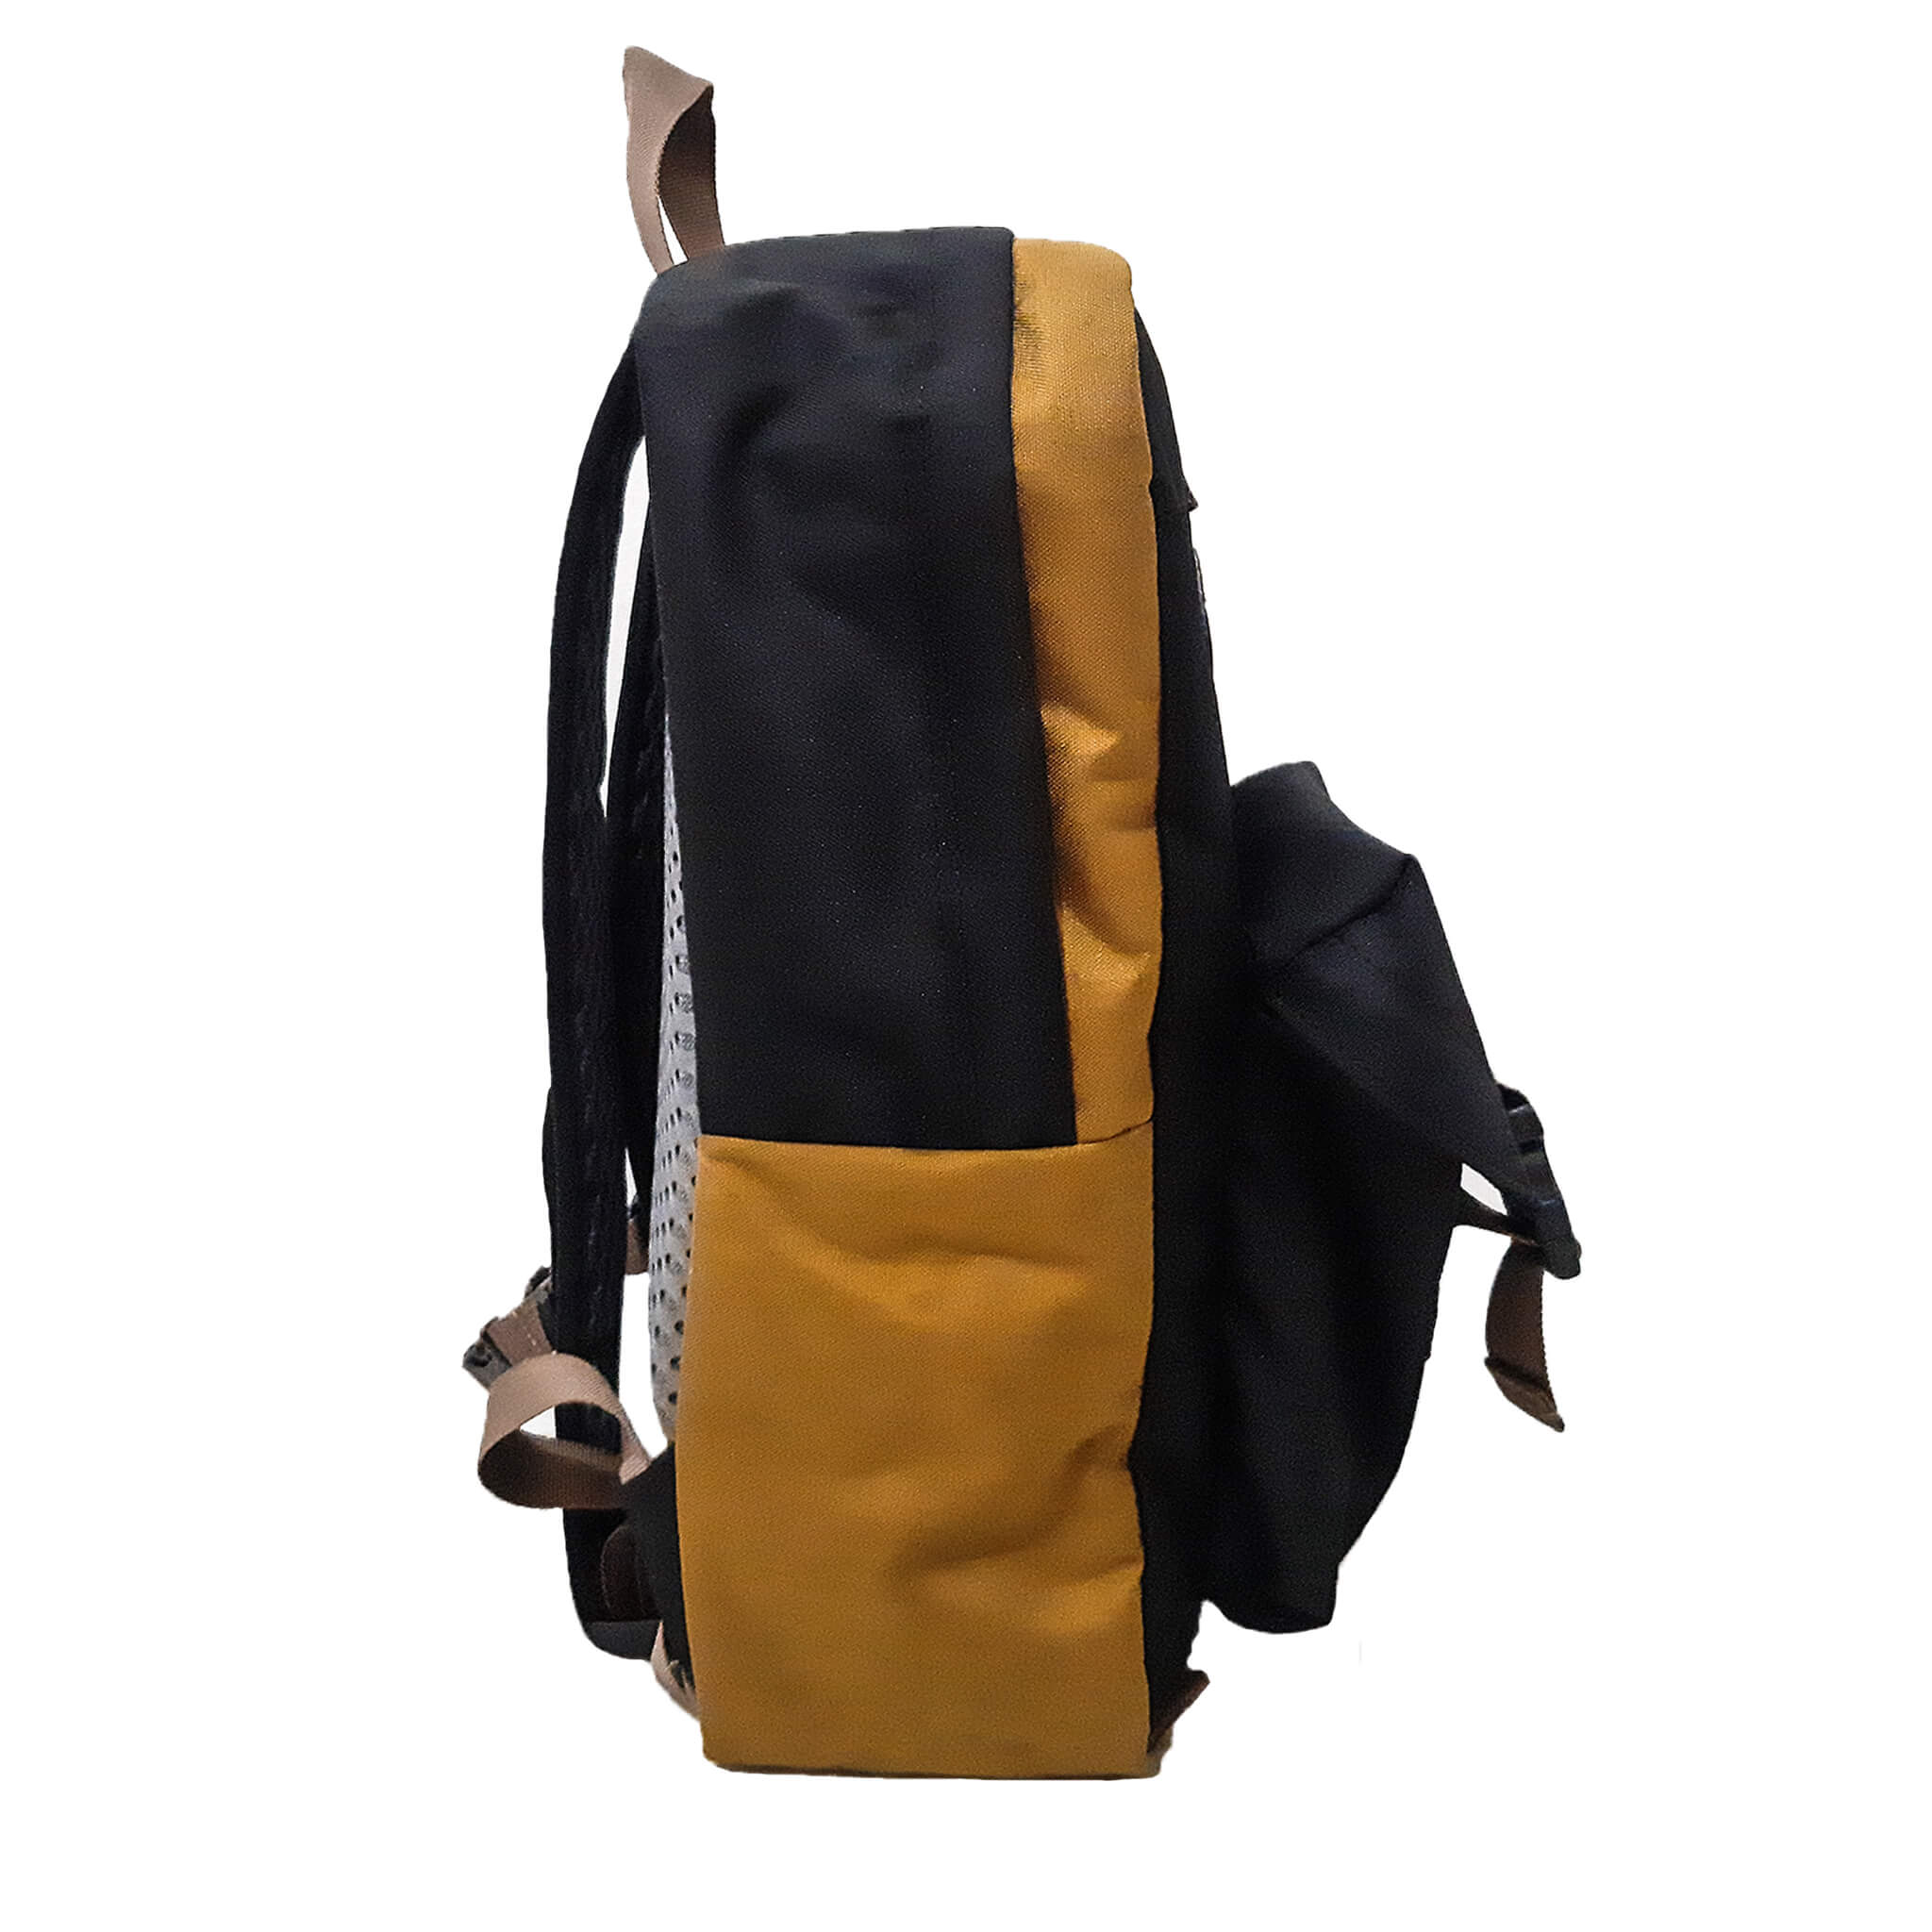 Awen backpack